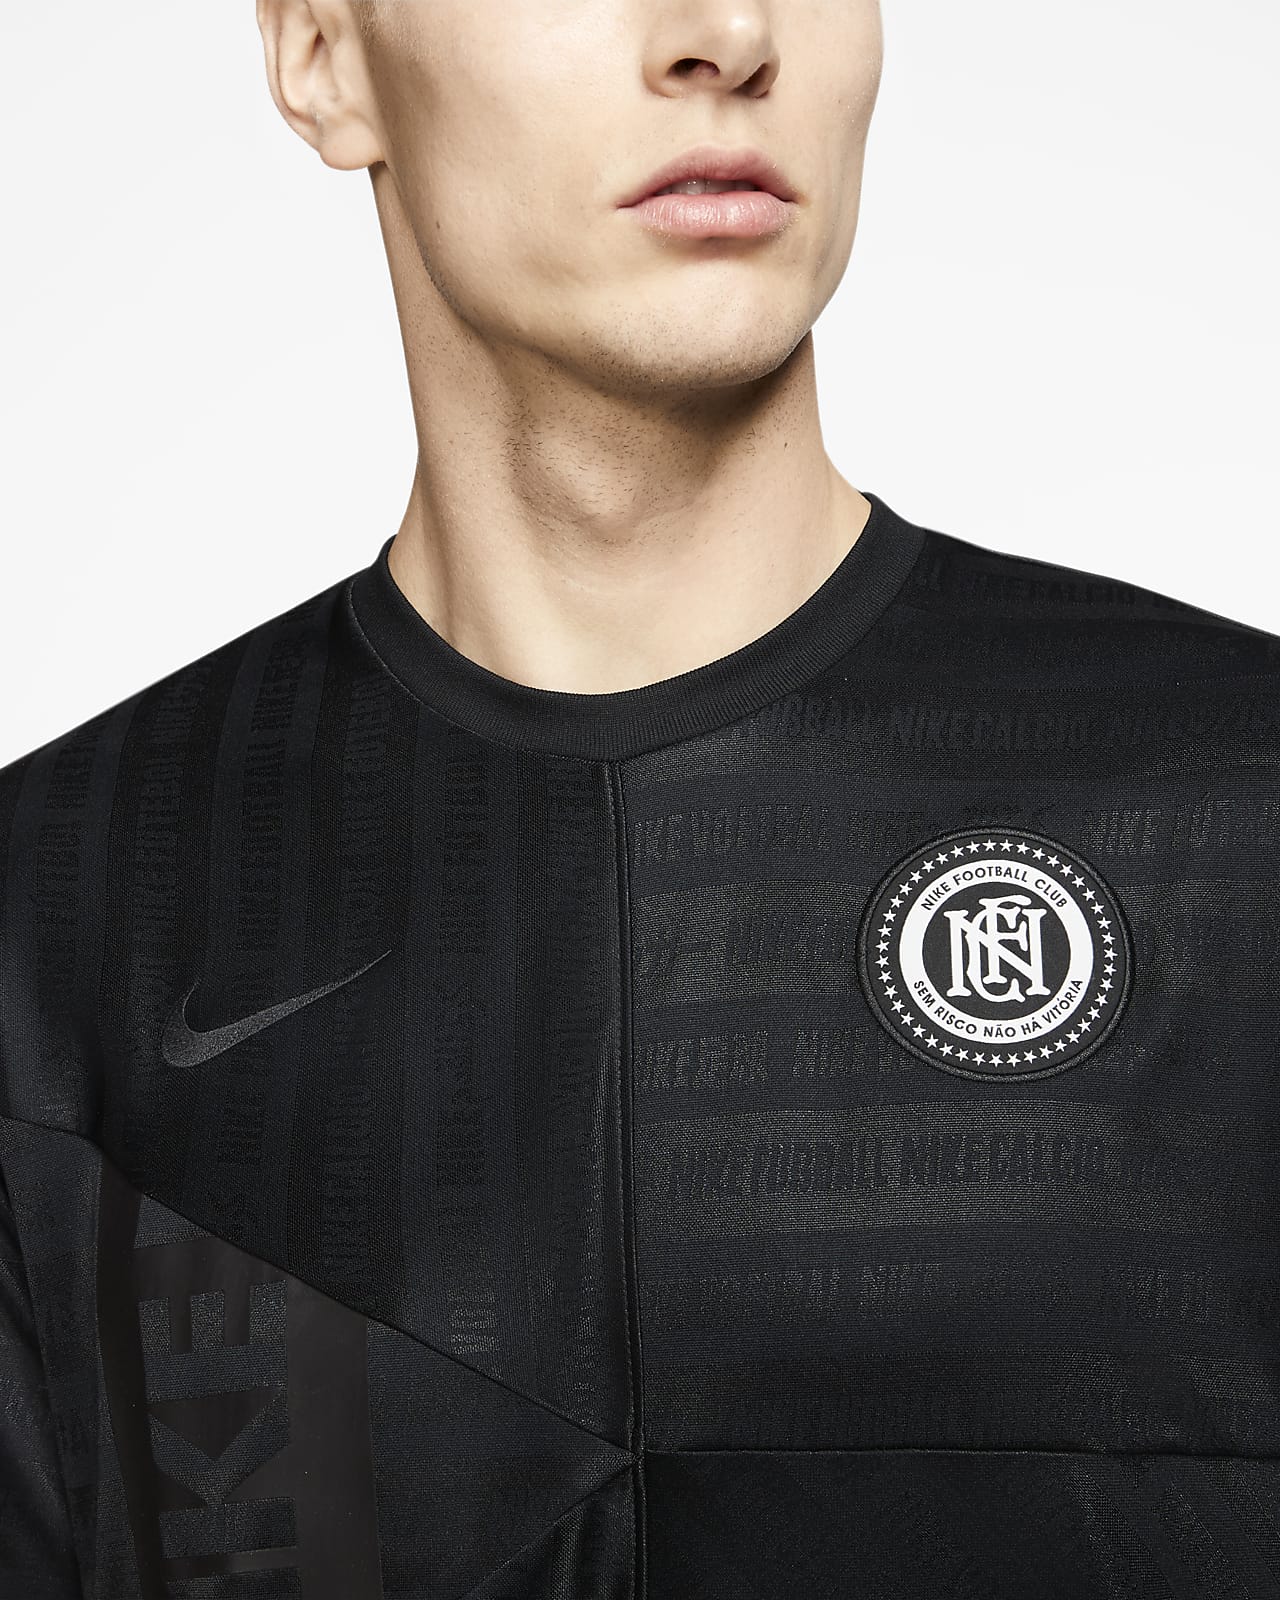 Verslinden rust Beukende Nike F.C. Away Football Shirt. Nike AU